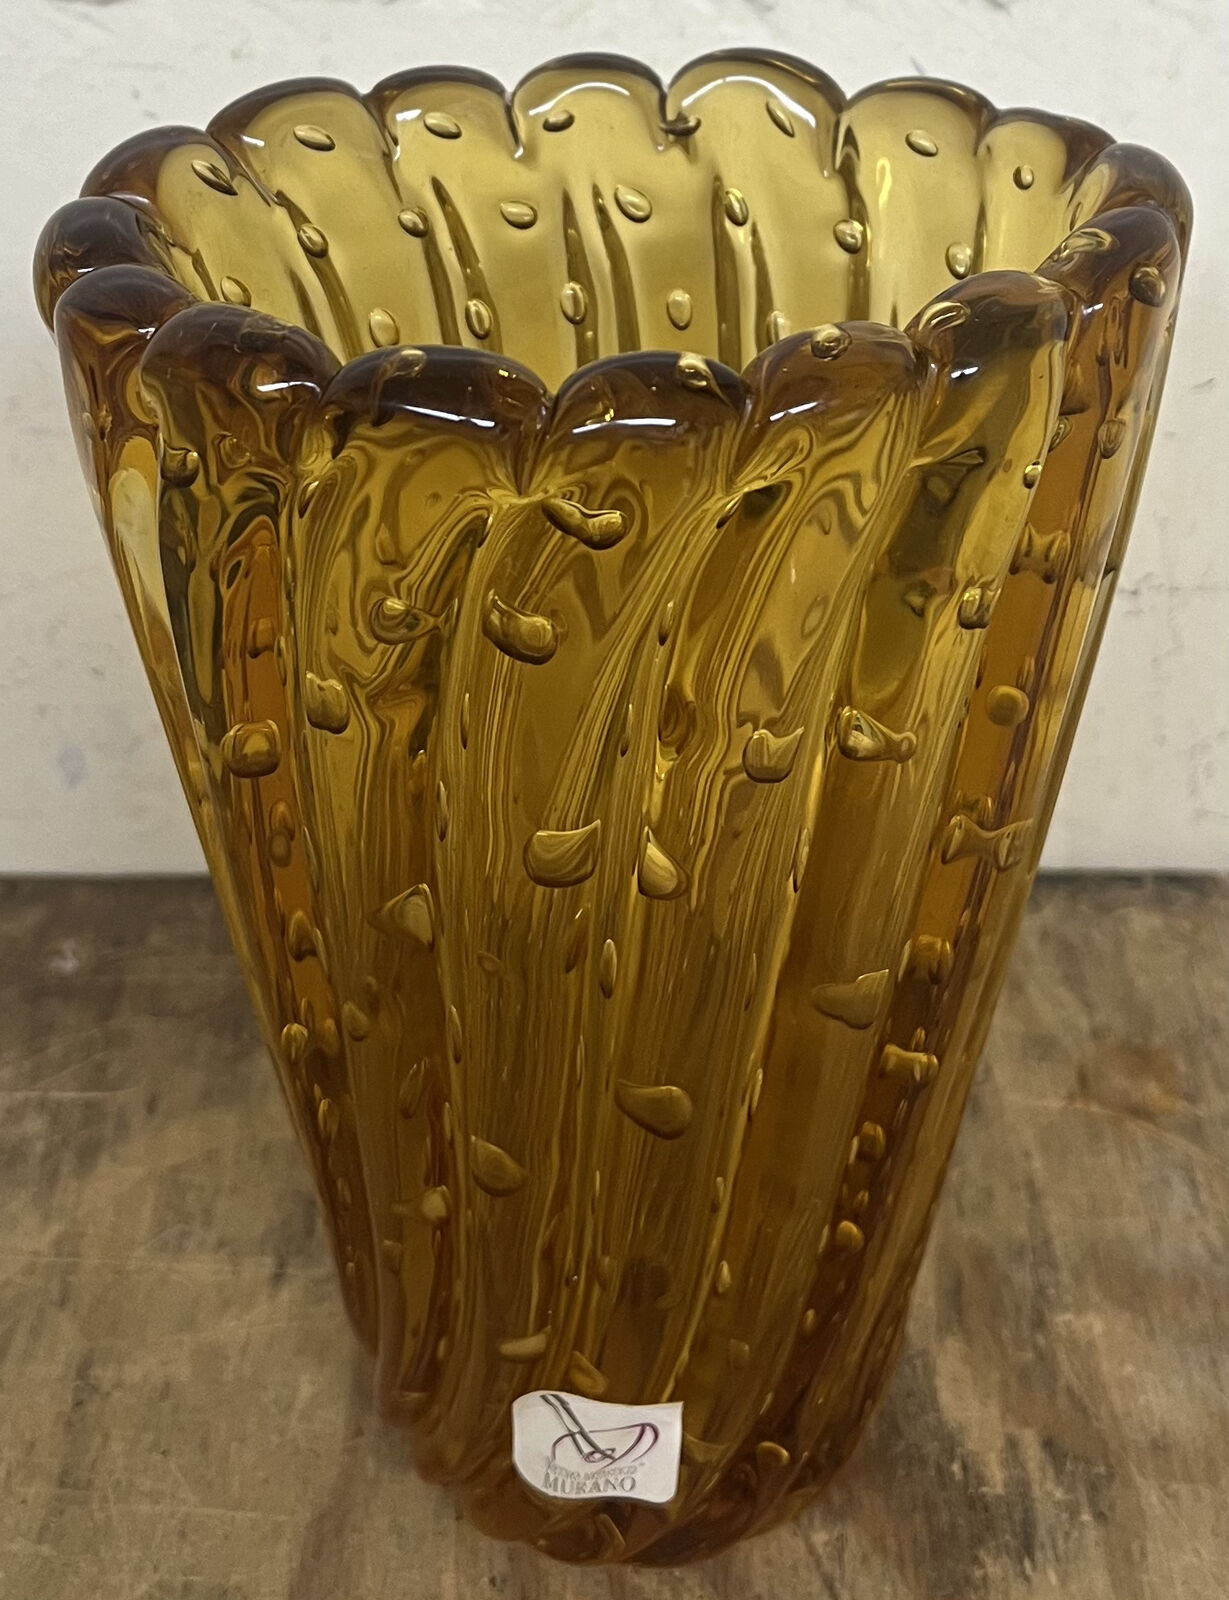 Signed Vetro Artistico - Vintage Brown Murano Glass Vase - 8.75